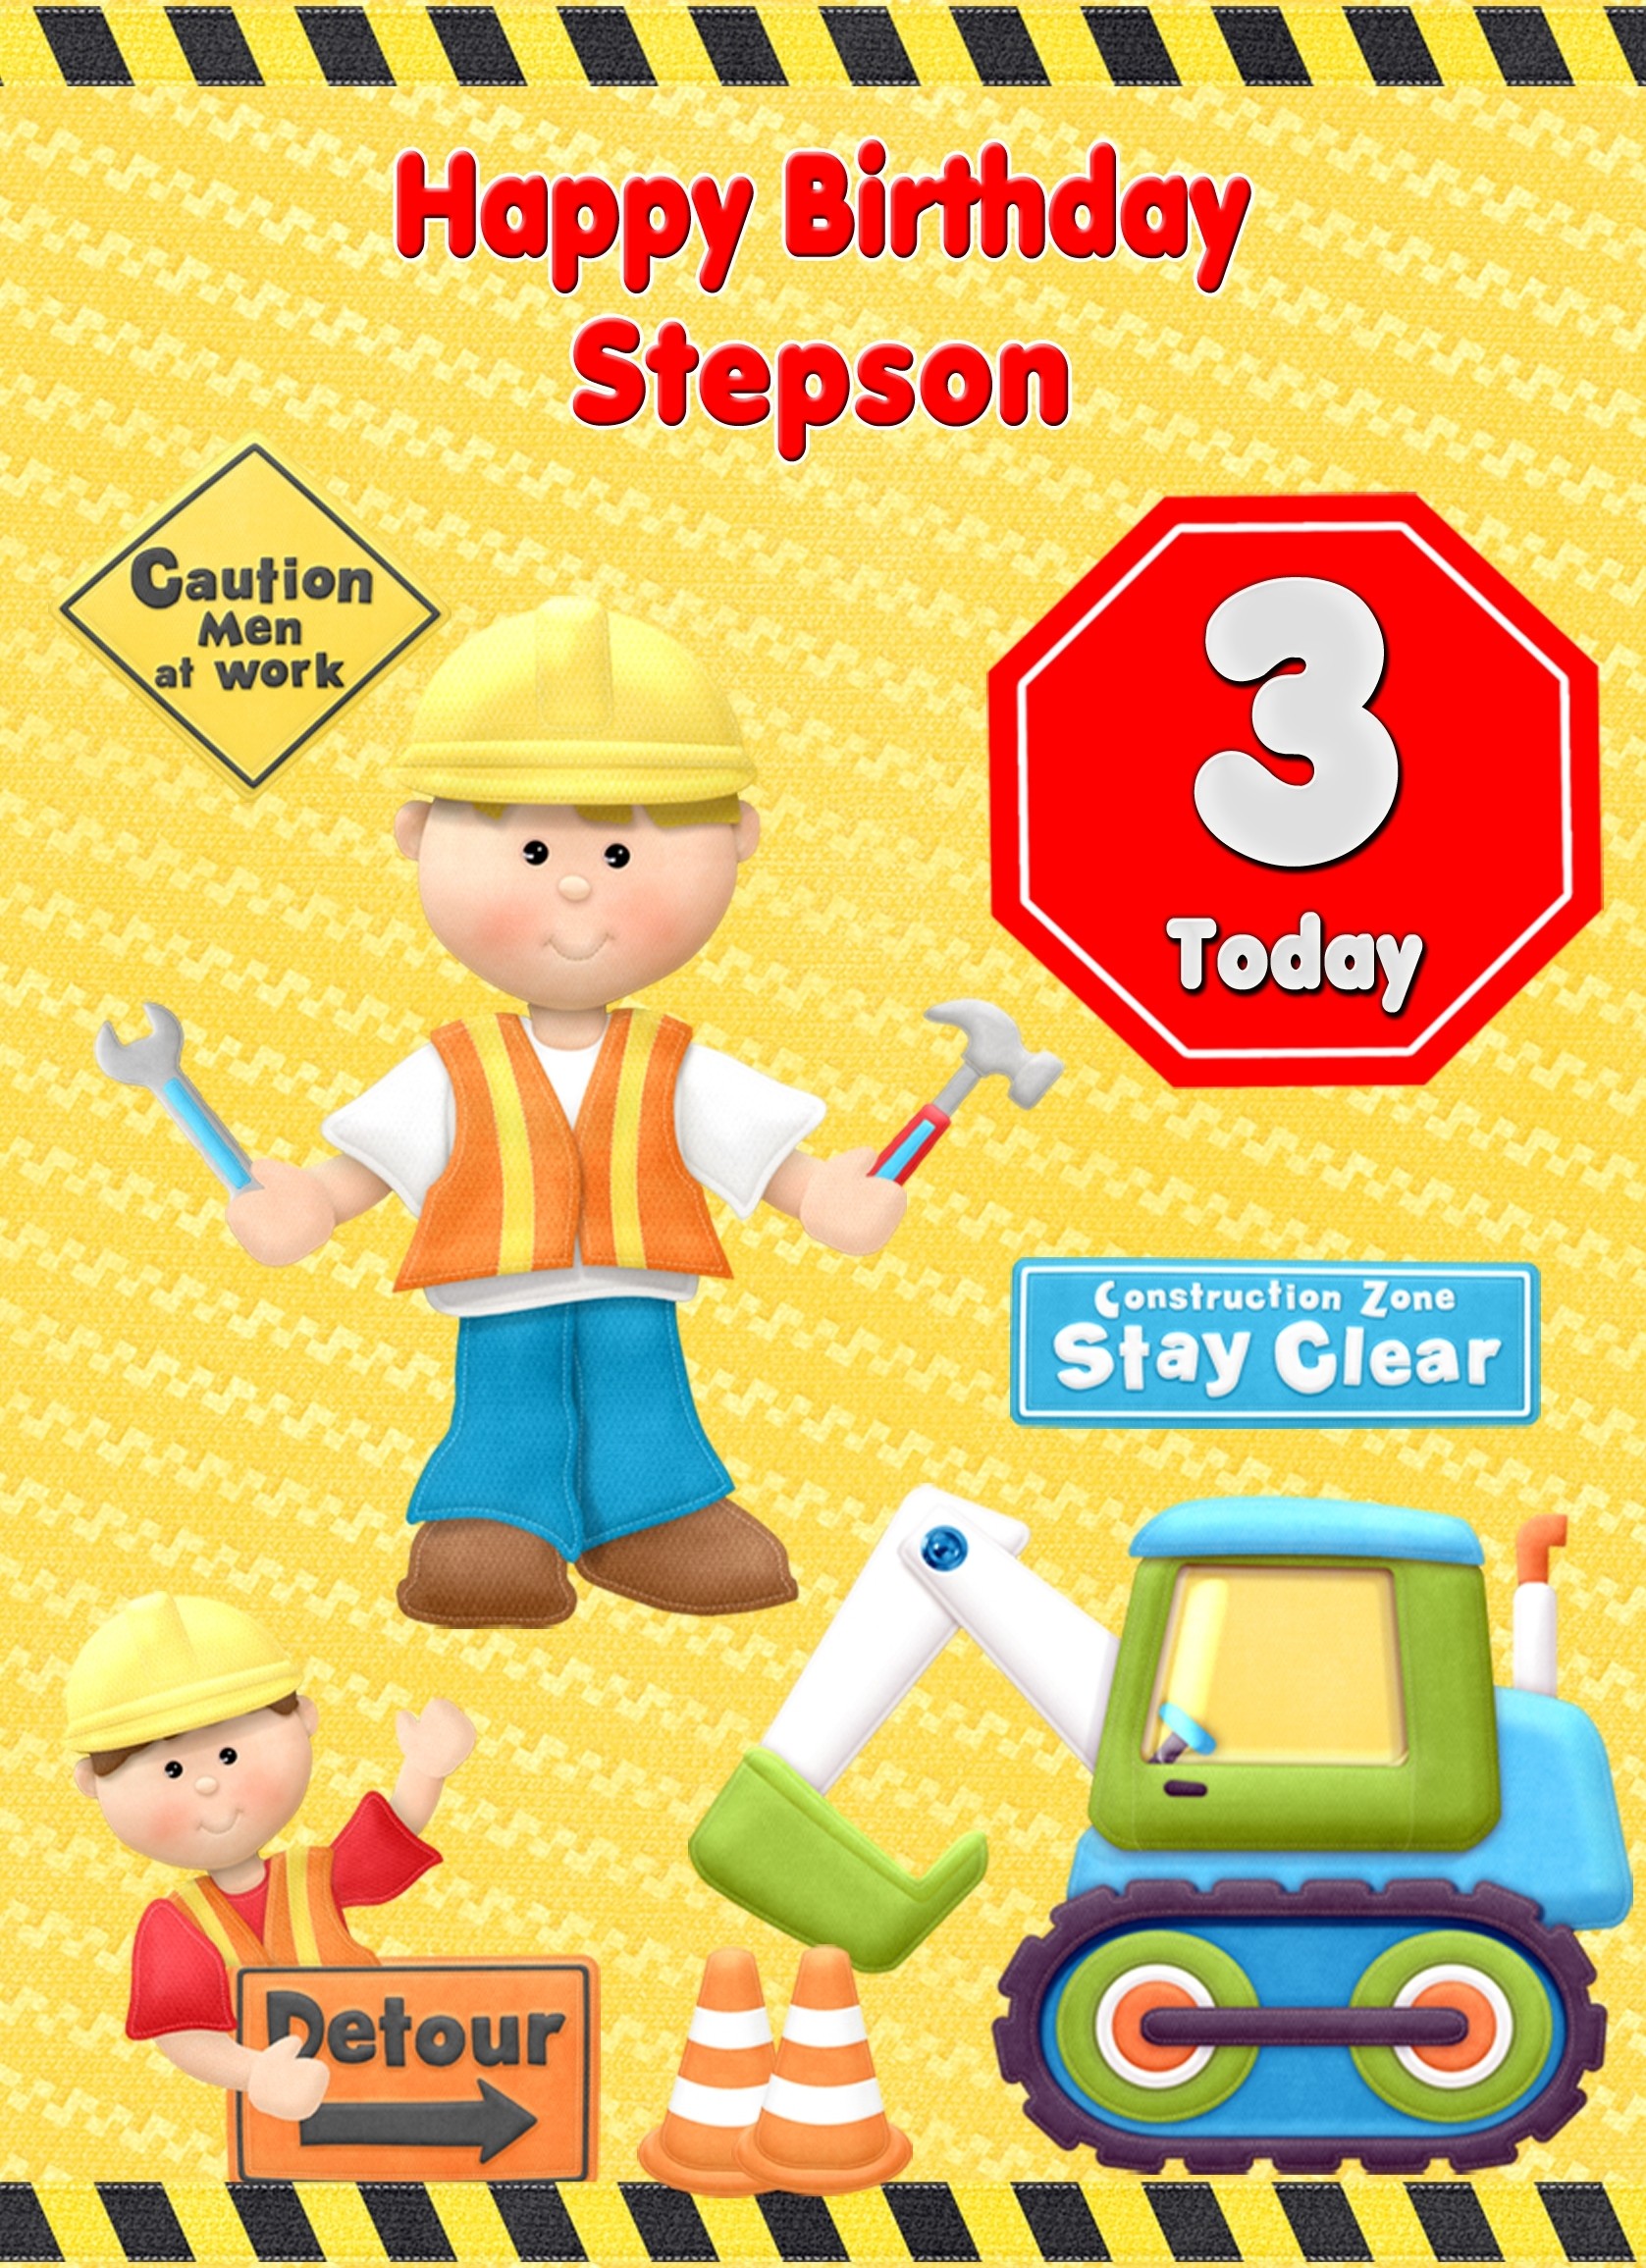 Kids 3rd Birthday Builder Cartoon Card for Stepson